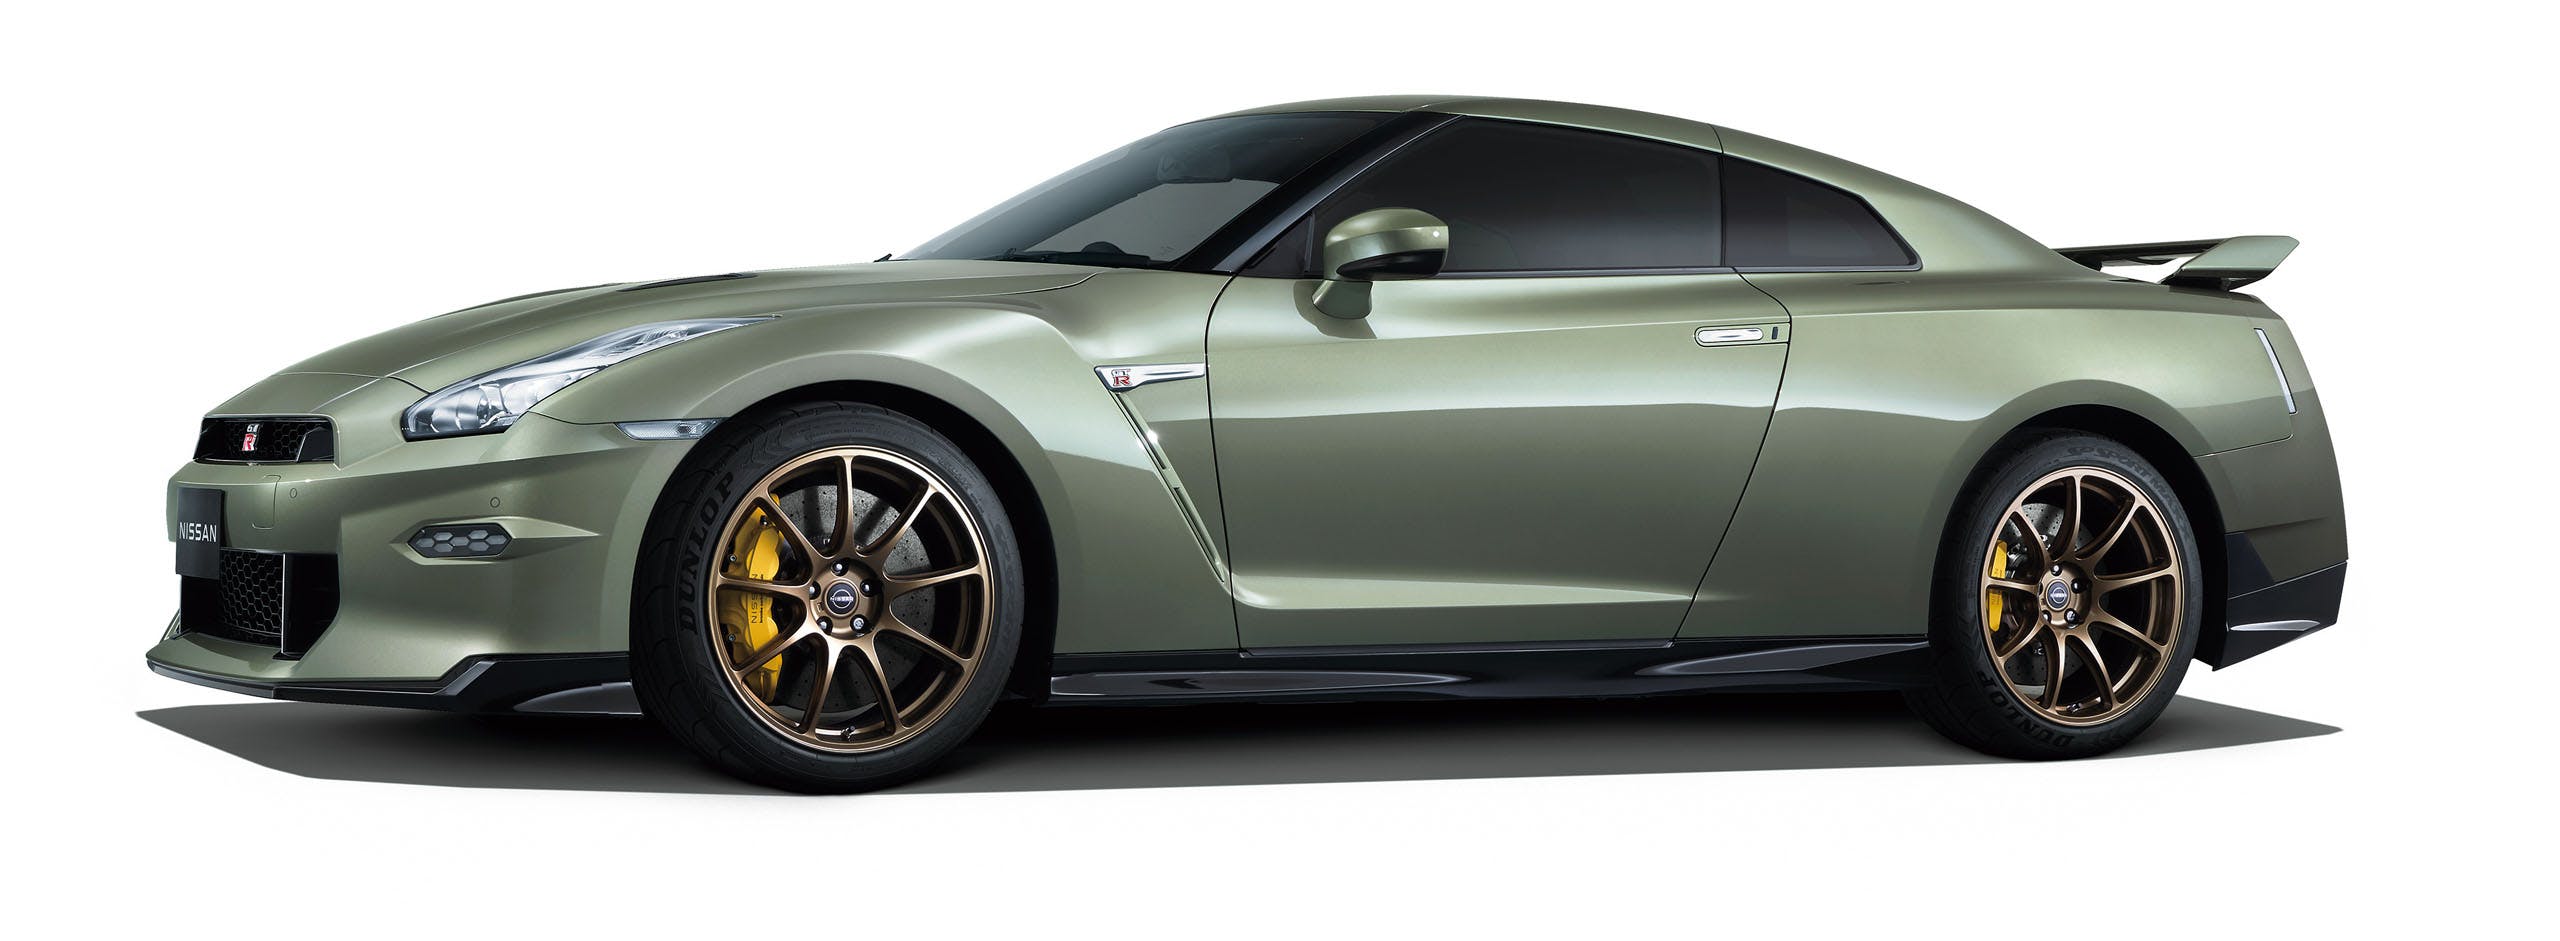 2025 Japanese-Market Nissan GT-R exterior side profile Millennium Jade